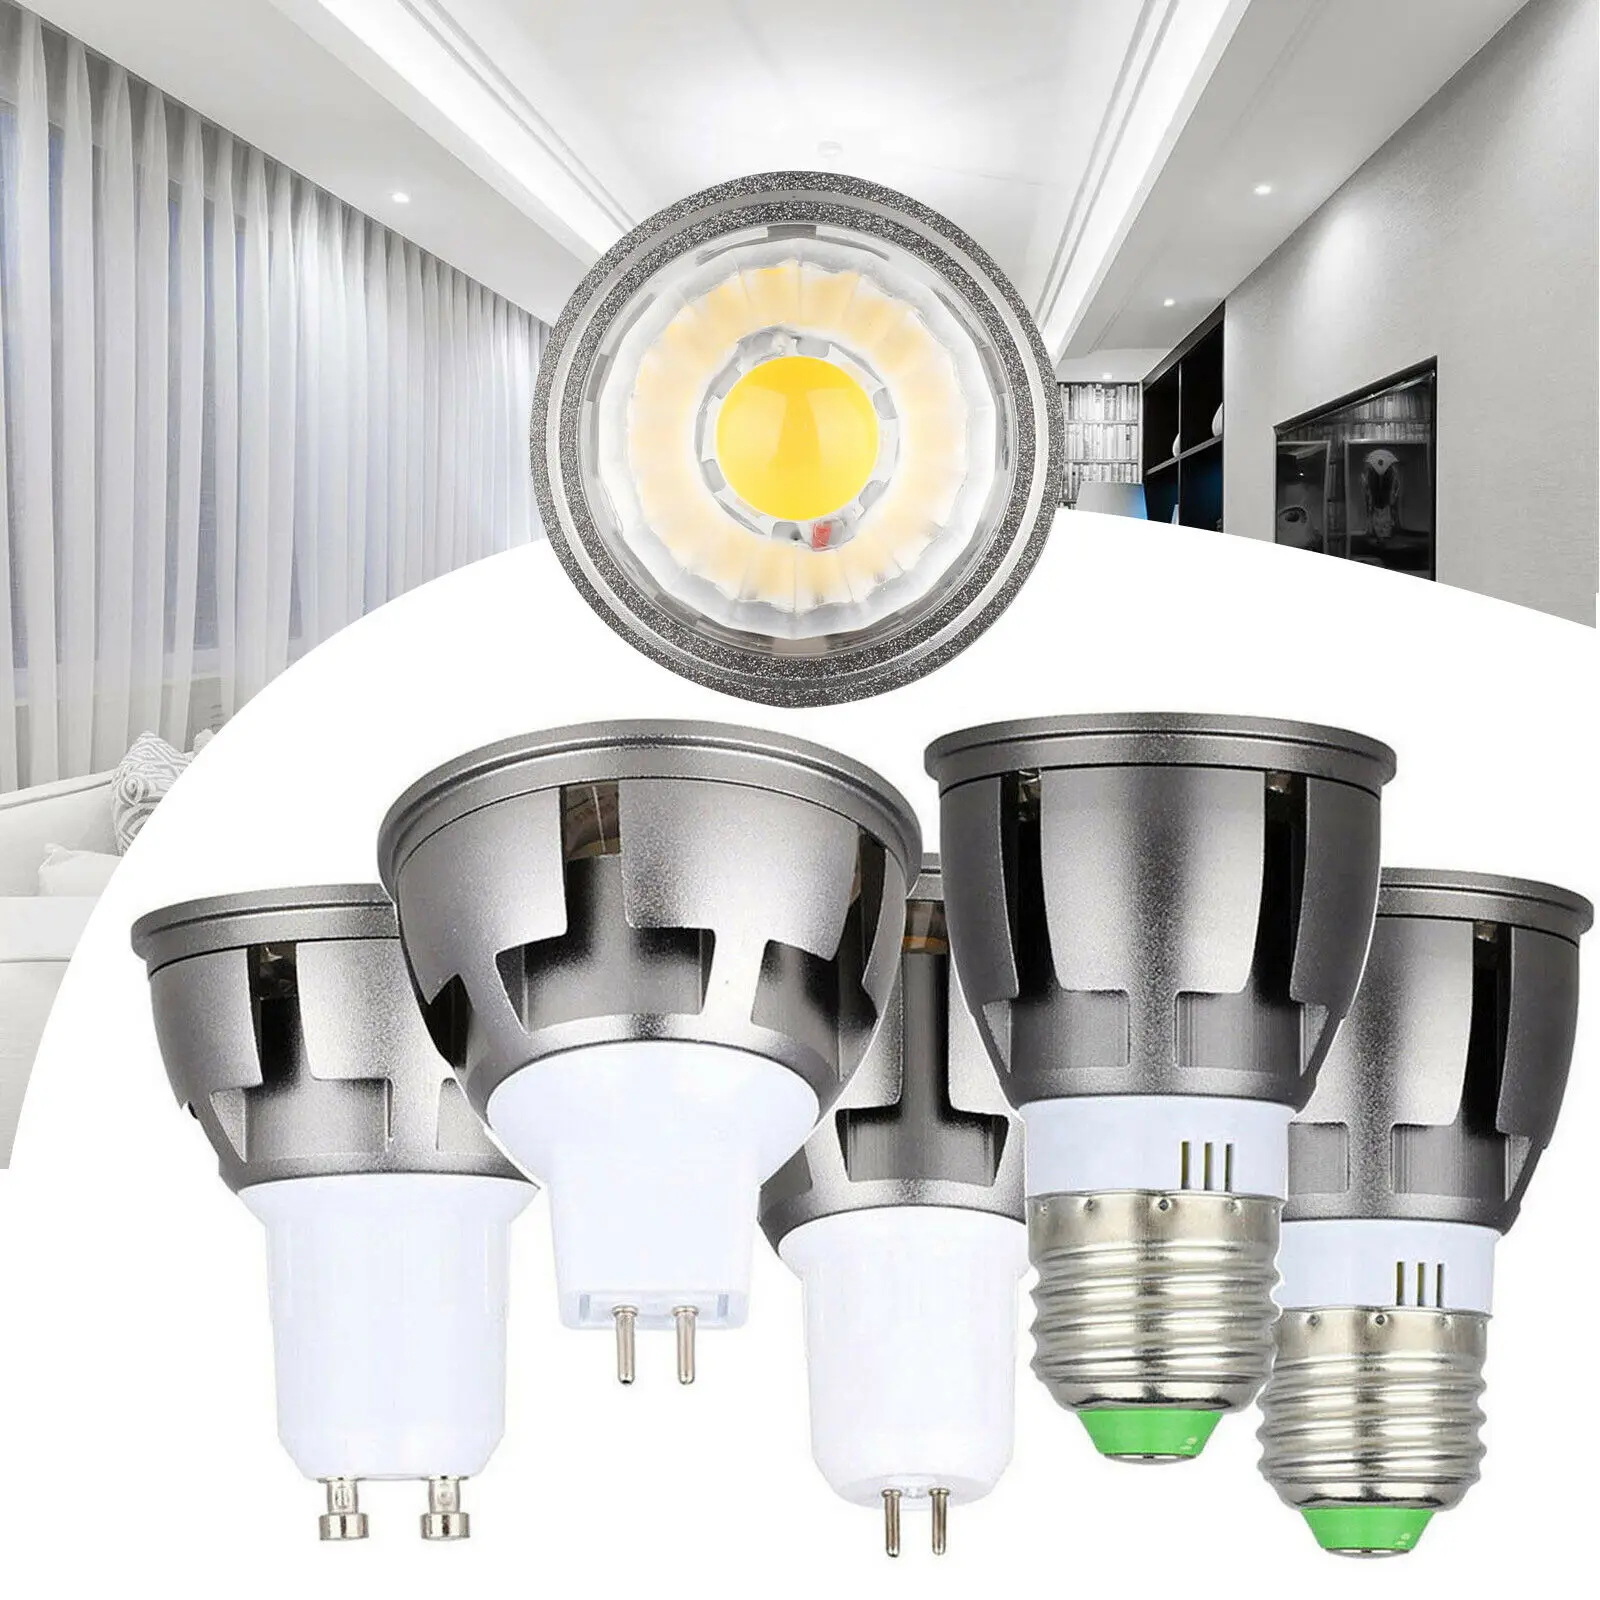 

Dimmable LED COB Spotlight Bulb GU10 MR16 GU5.3 E27 6W 9W 12W Lamp Warm Cool White Neutral White 12V 220V 110V Lamps for Home